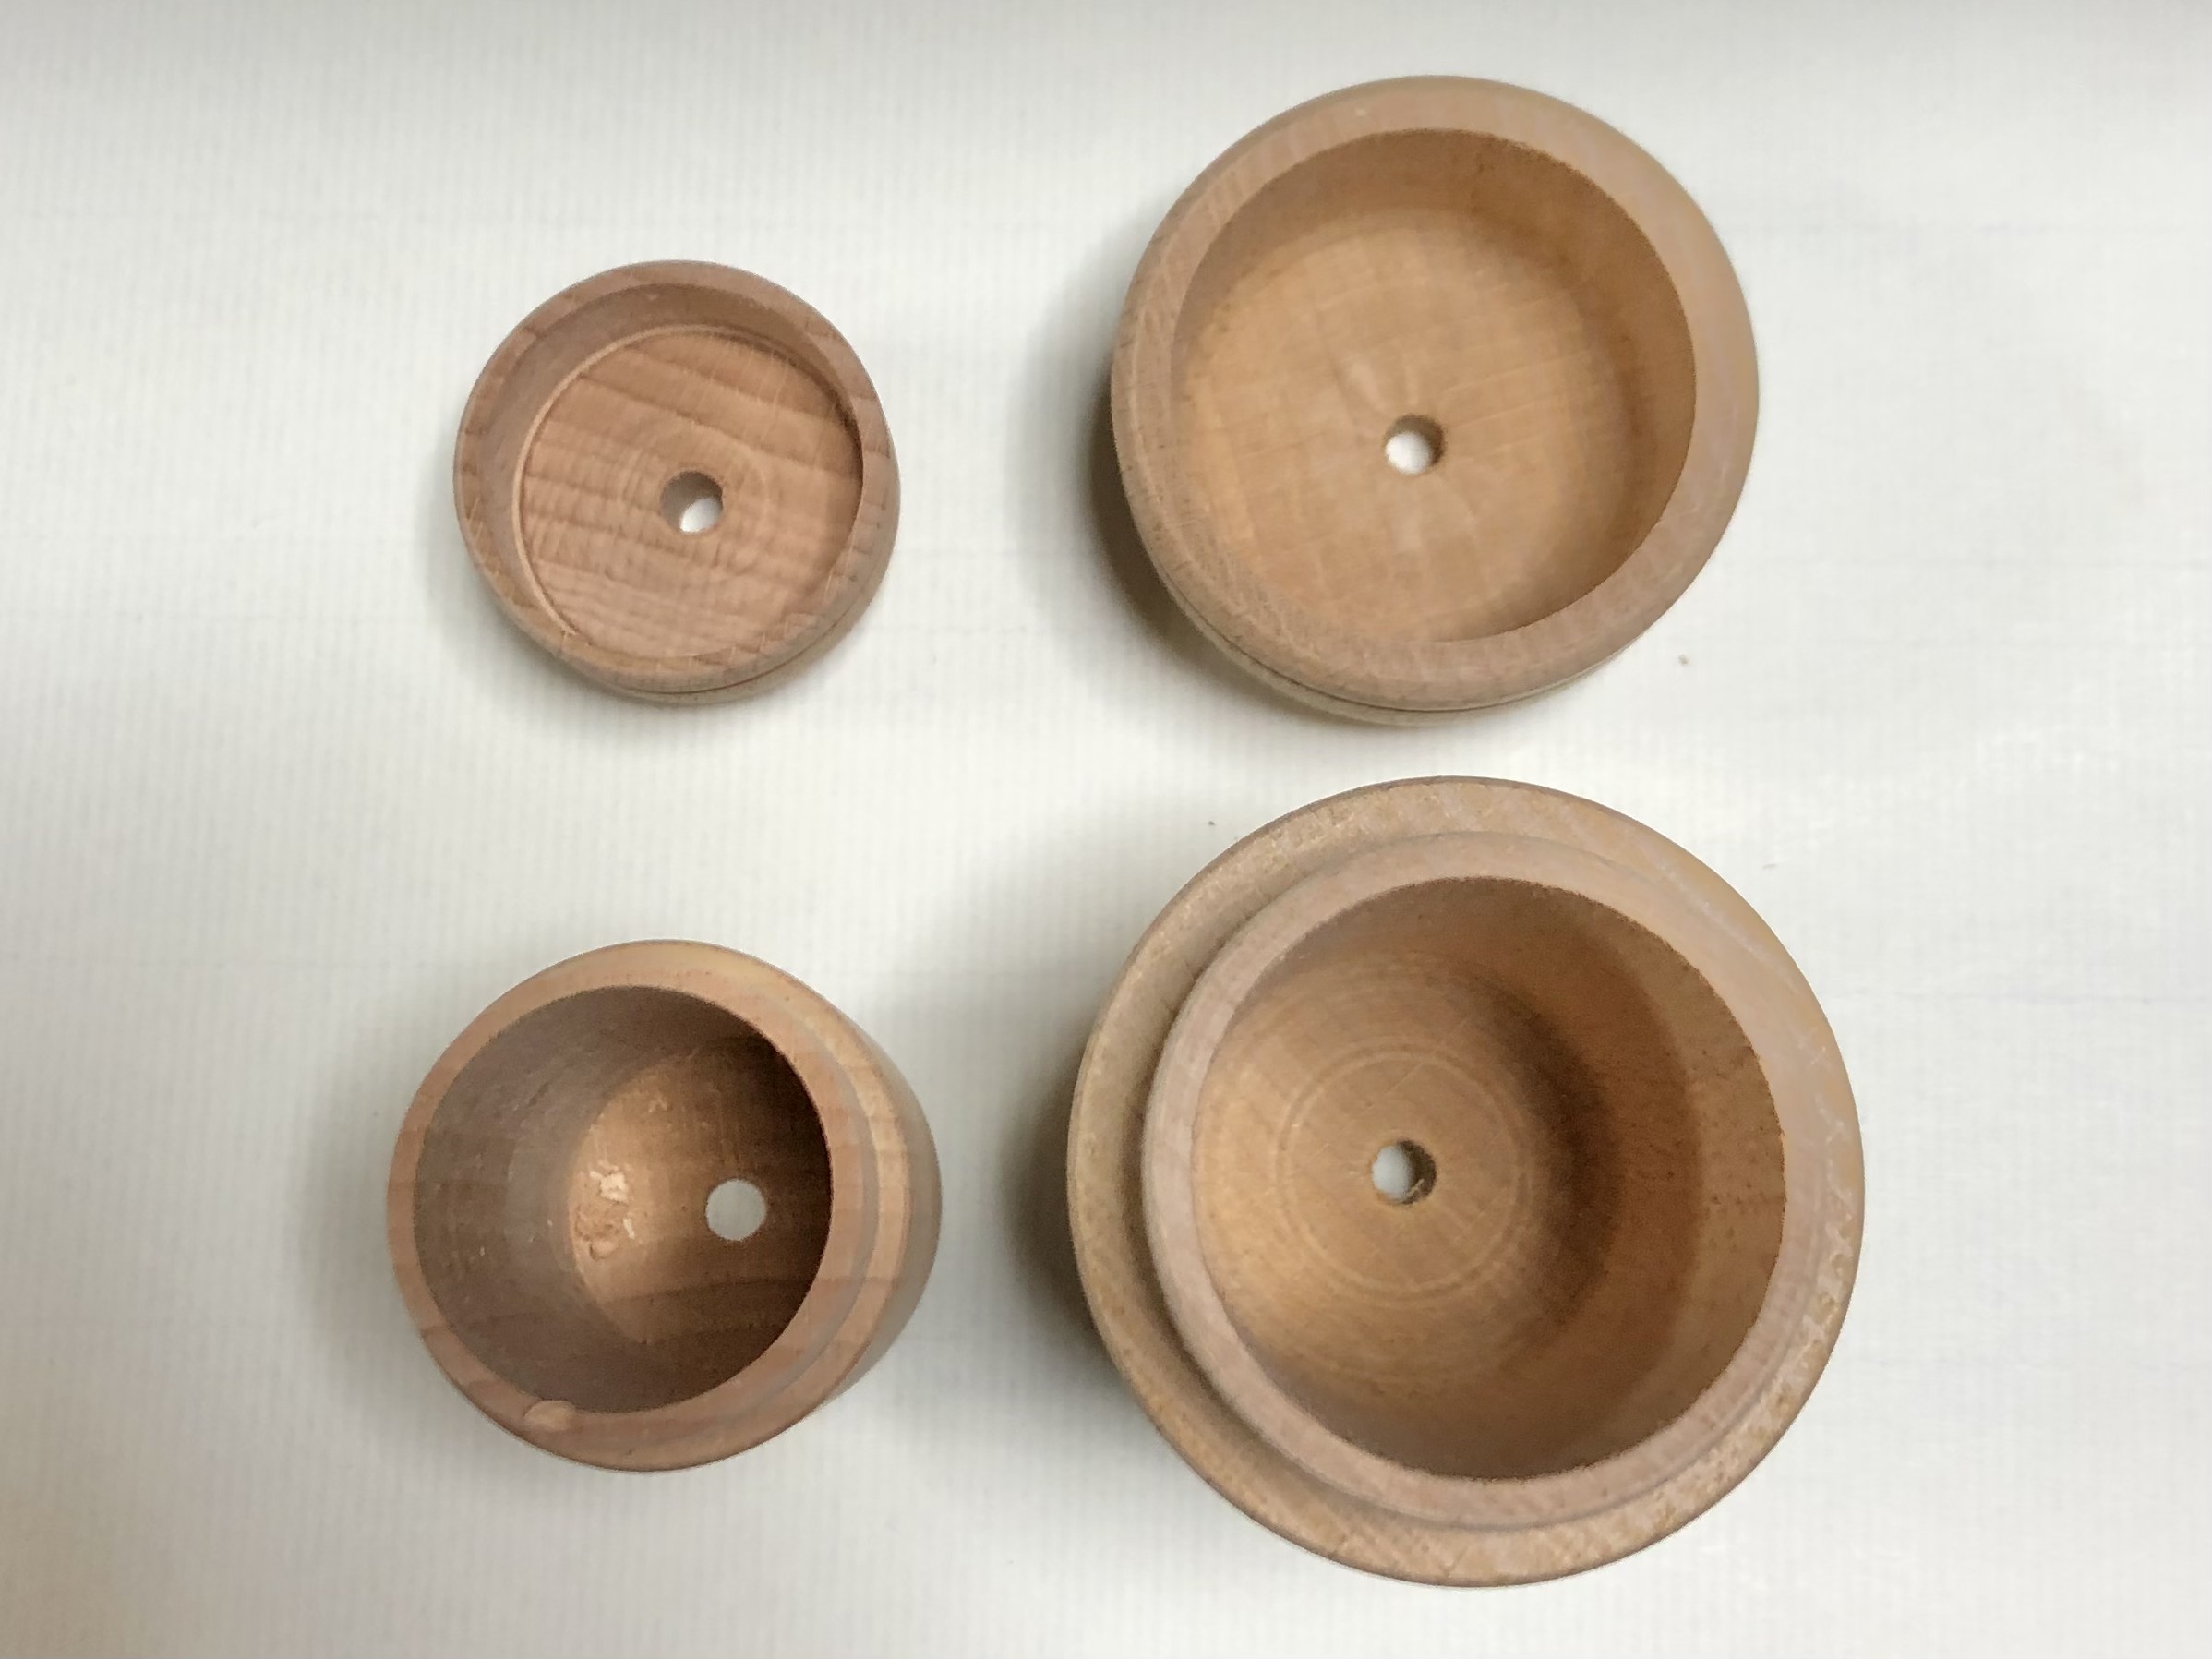 SALE】 小さな印籠 印籠 瓢箪型 【d25-5_c10】 木製 印籠 - invertir